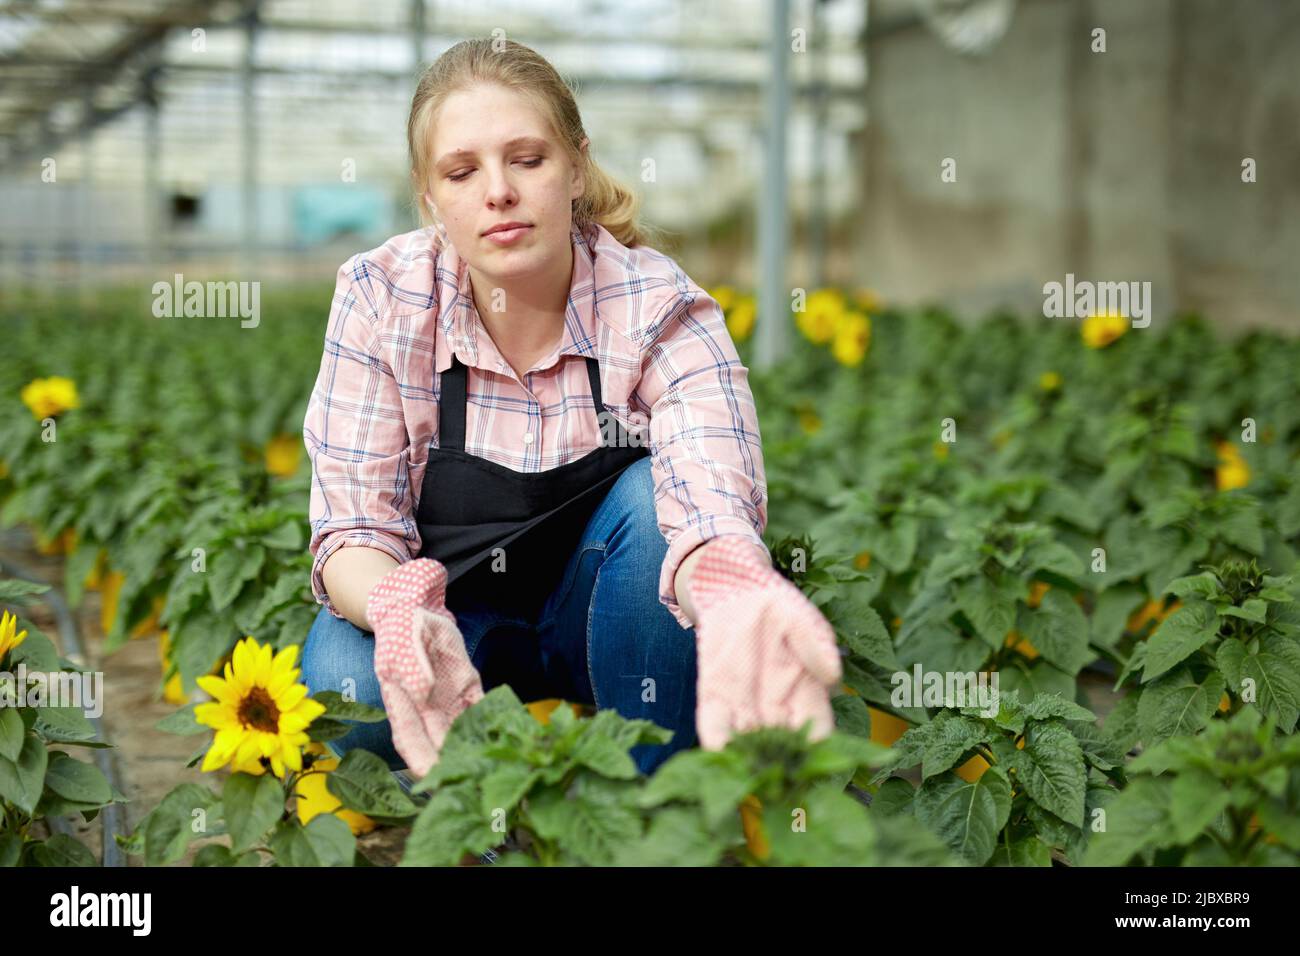 Female caring of decorative sunflowers Stock Photo